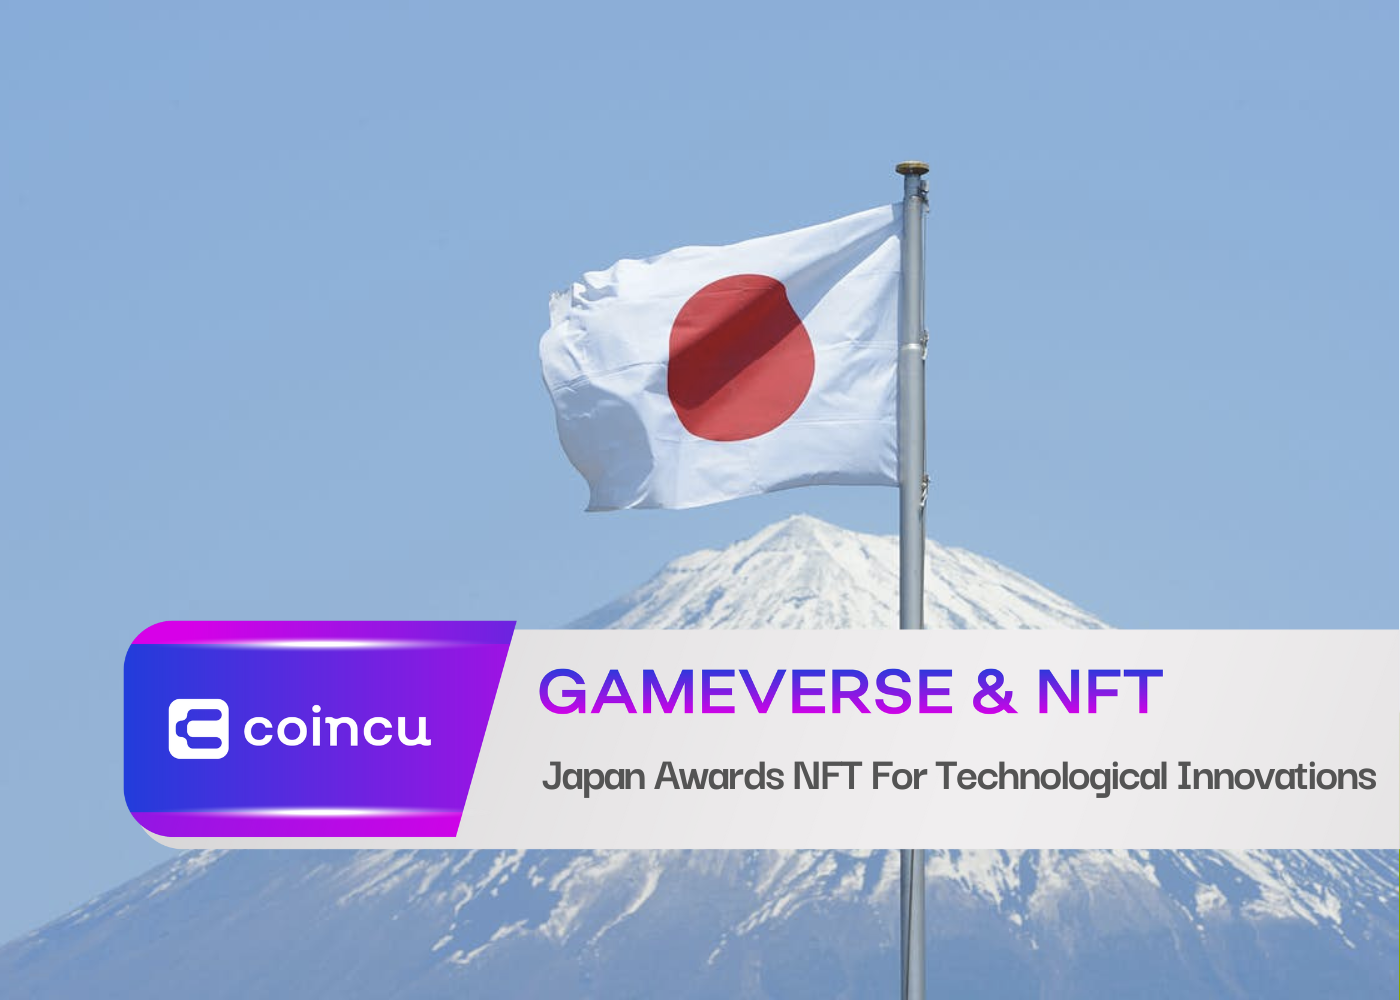 Japan Awards NFT For Technological Innovations